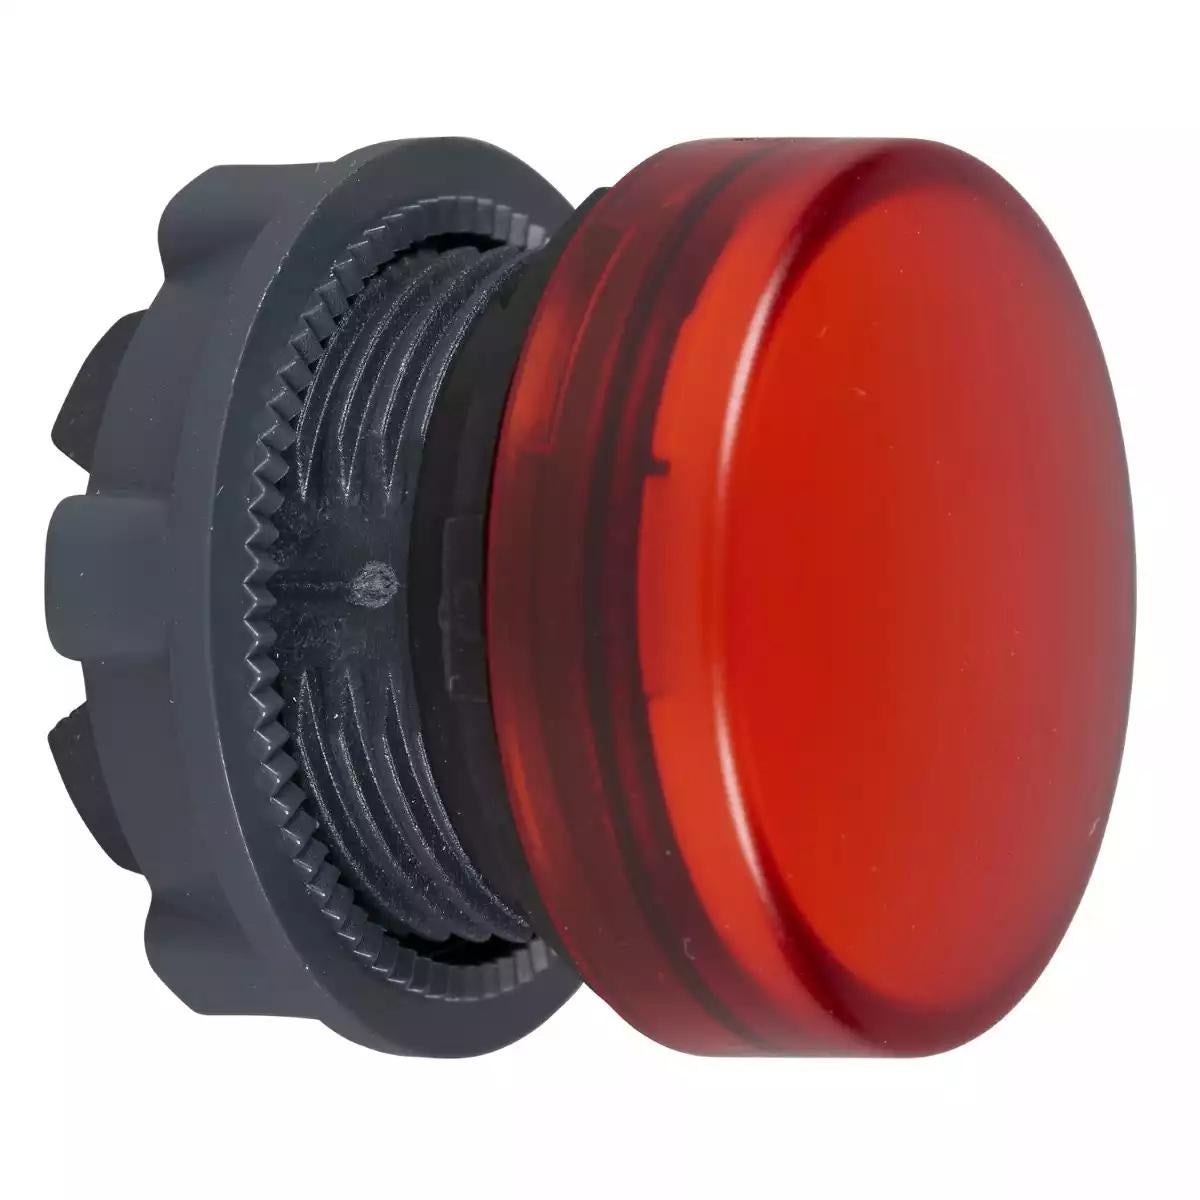 Pilot light head, Harmony XB5, metal, red, 22mm, plain lens for BA9s bulb